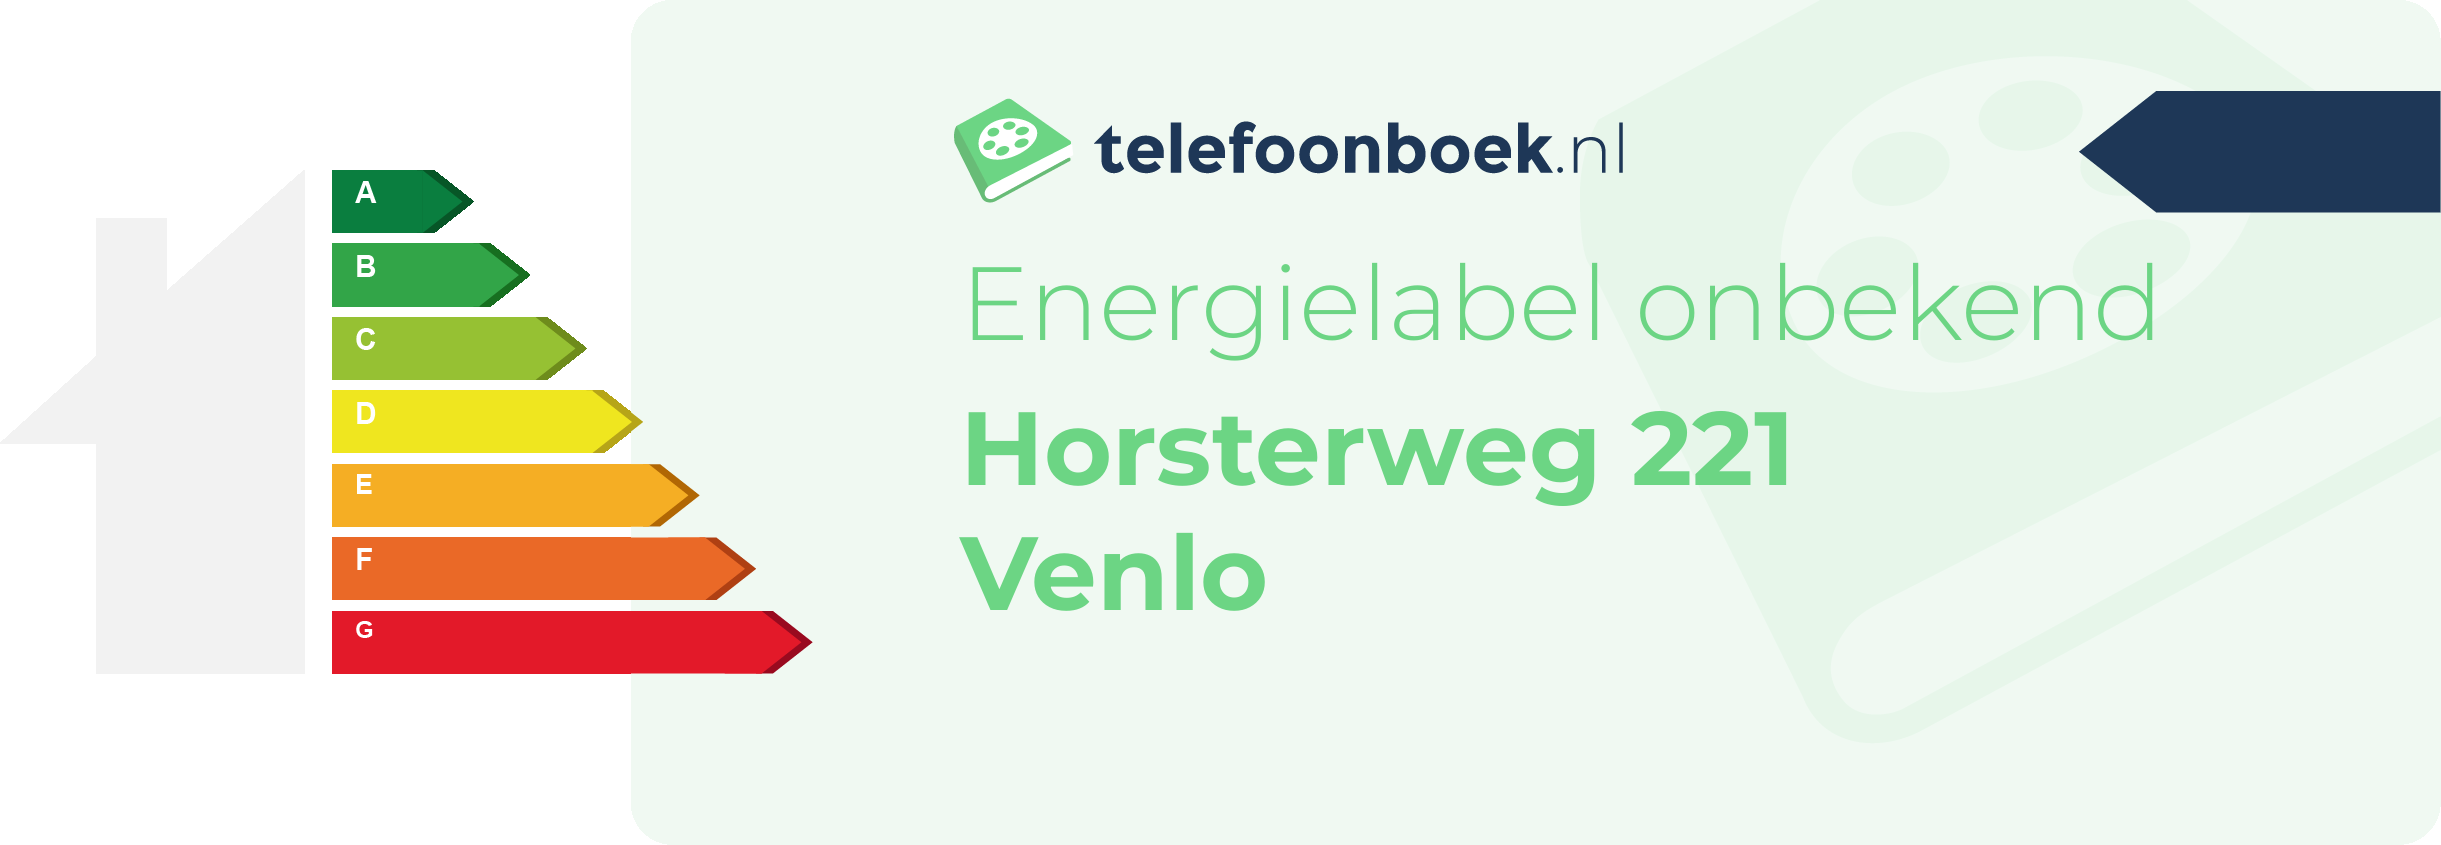 Energielabel Horsterweg 221 Venlo